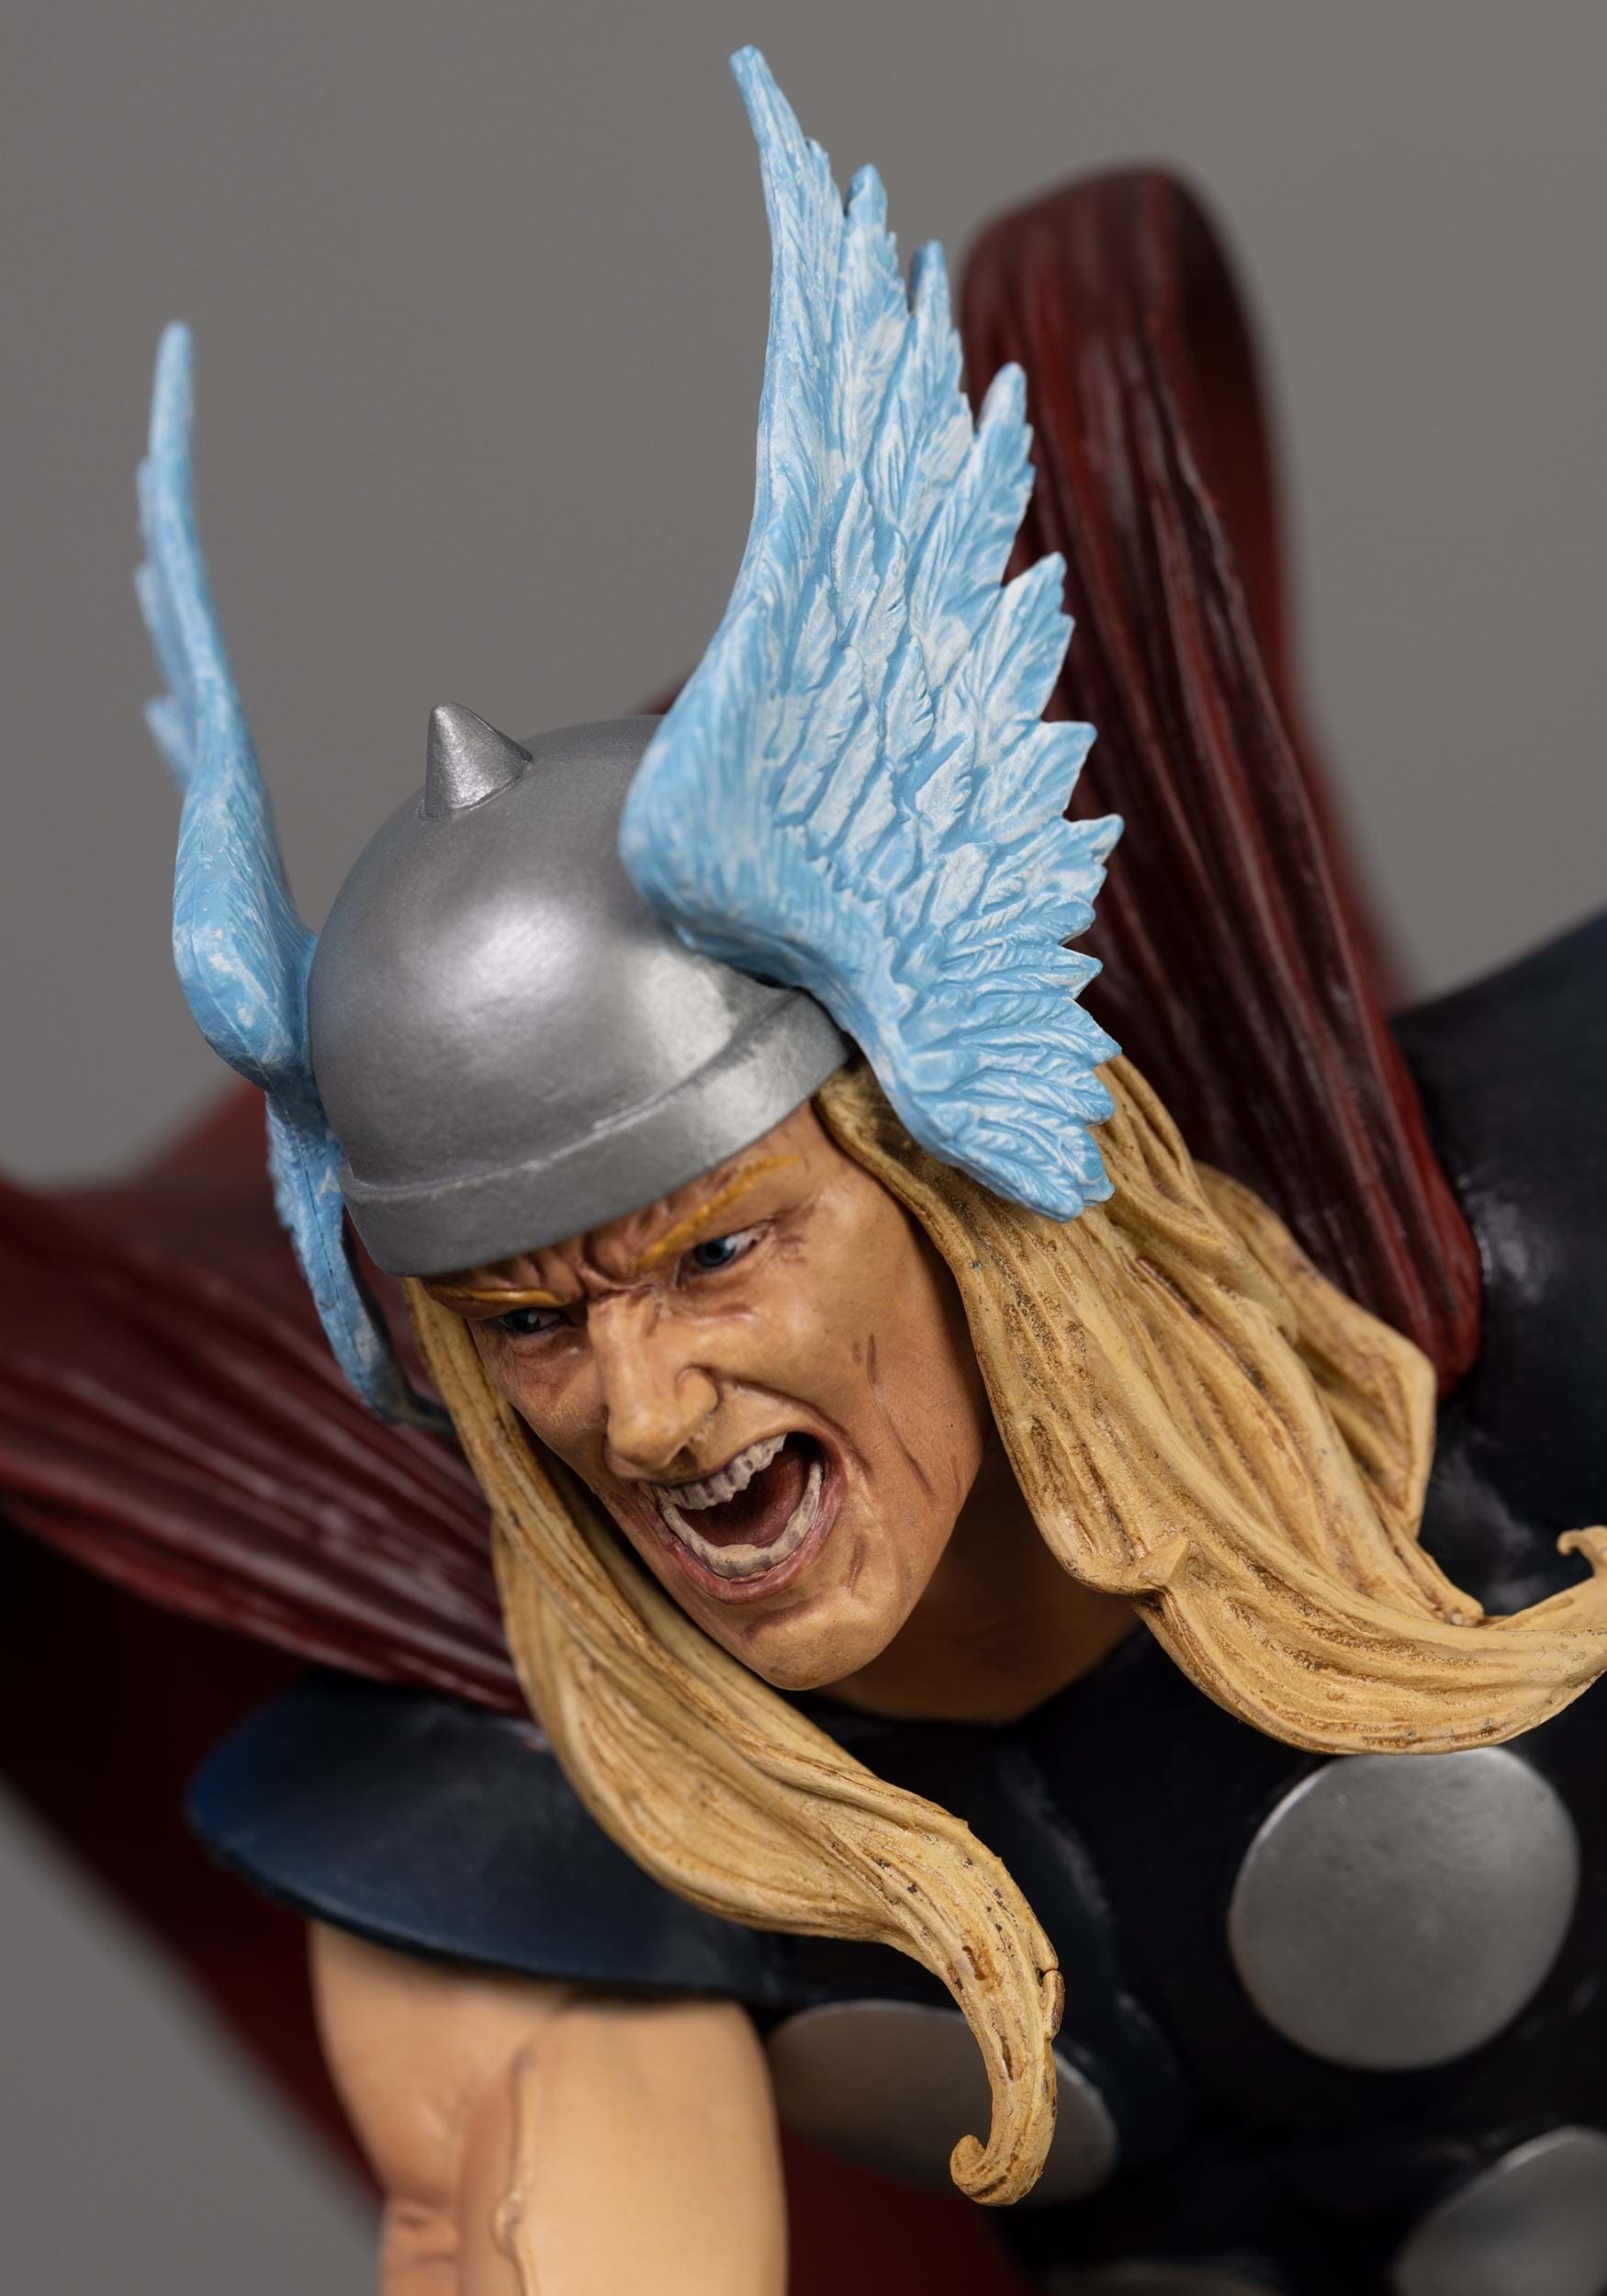 Diamond Select Marvel Gallery Comic Book Thor PVC Statue